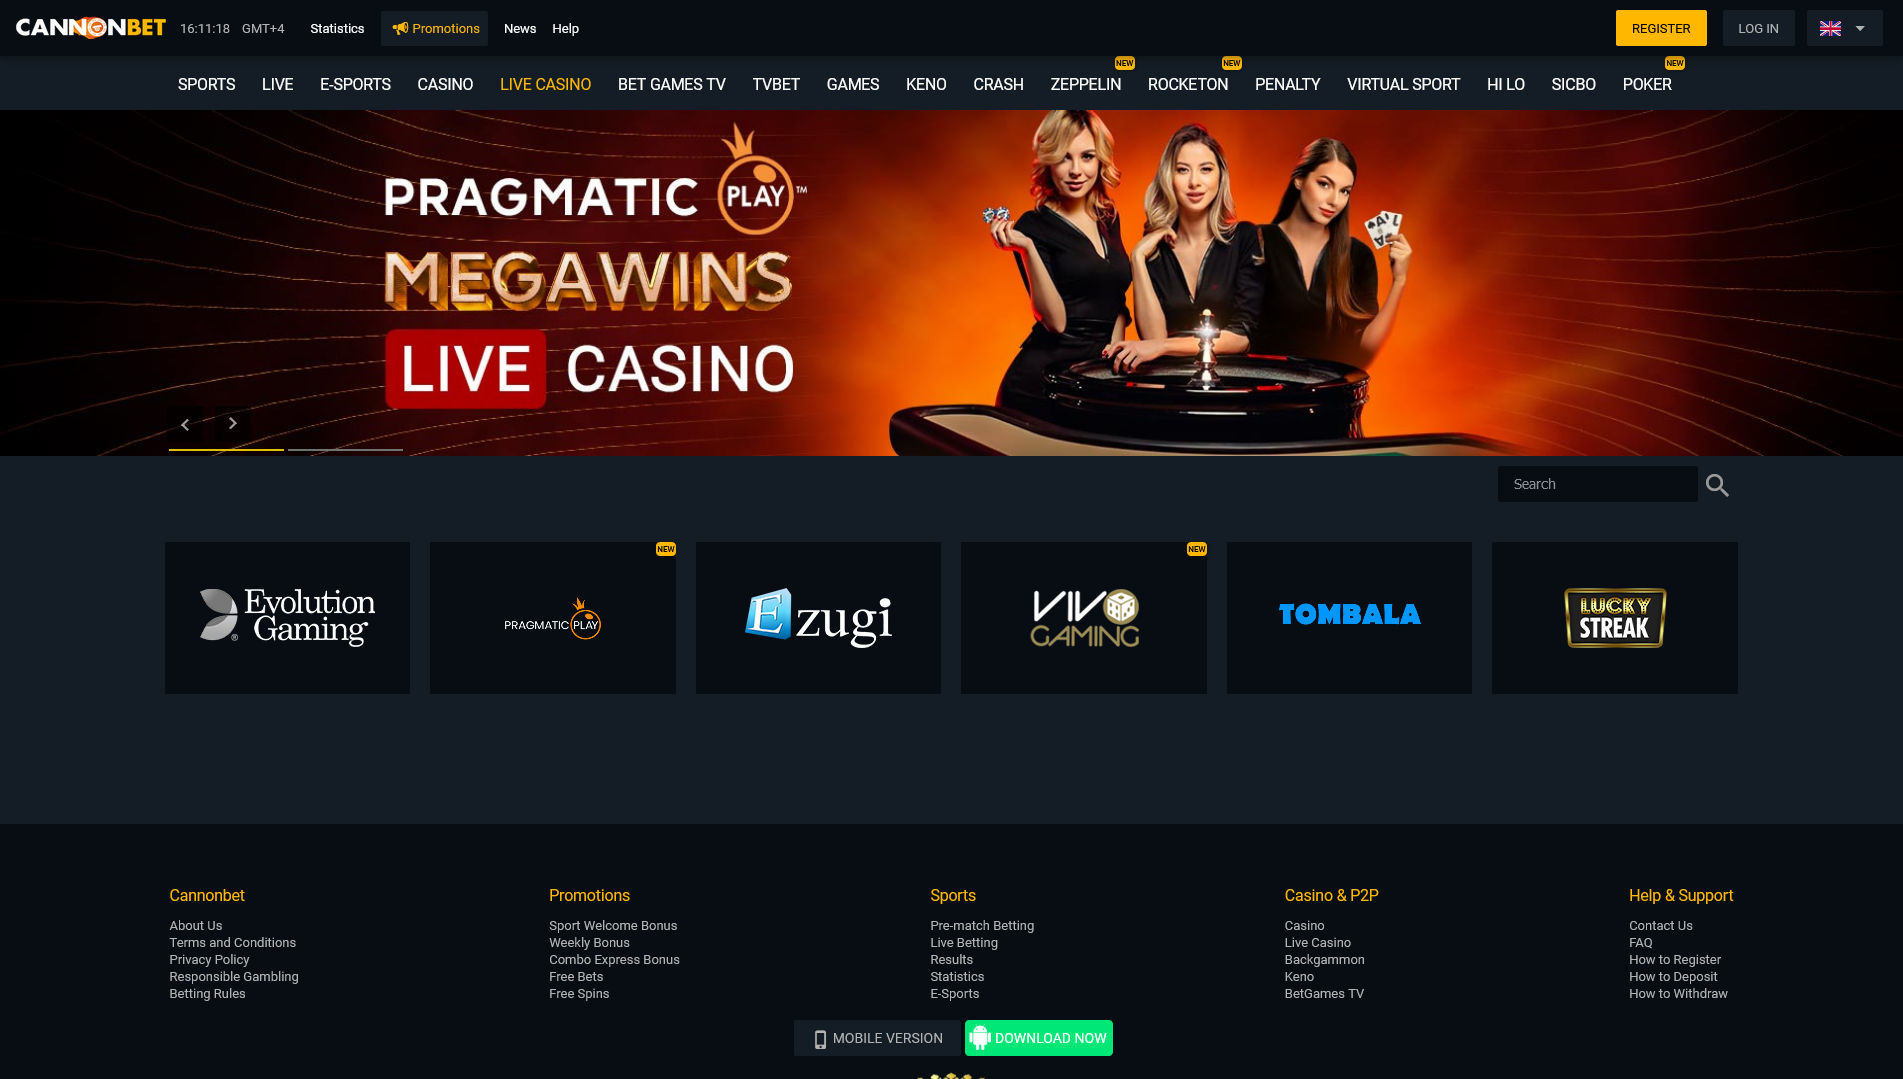 CannonBet Casino Live Dealer Games